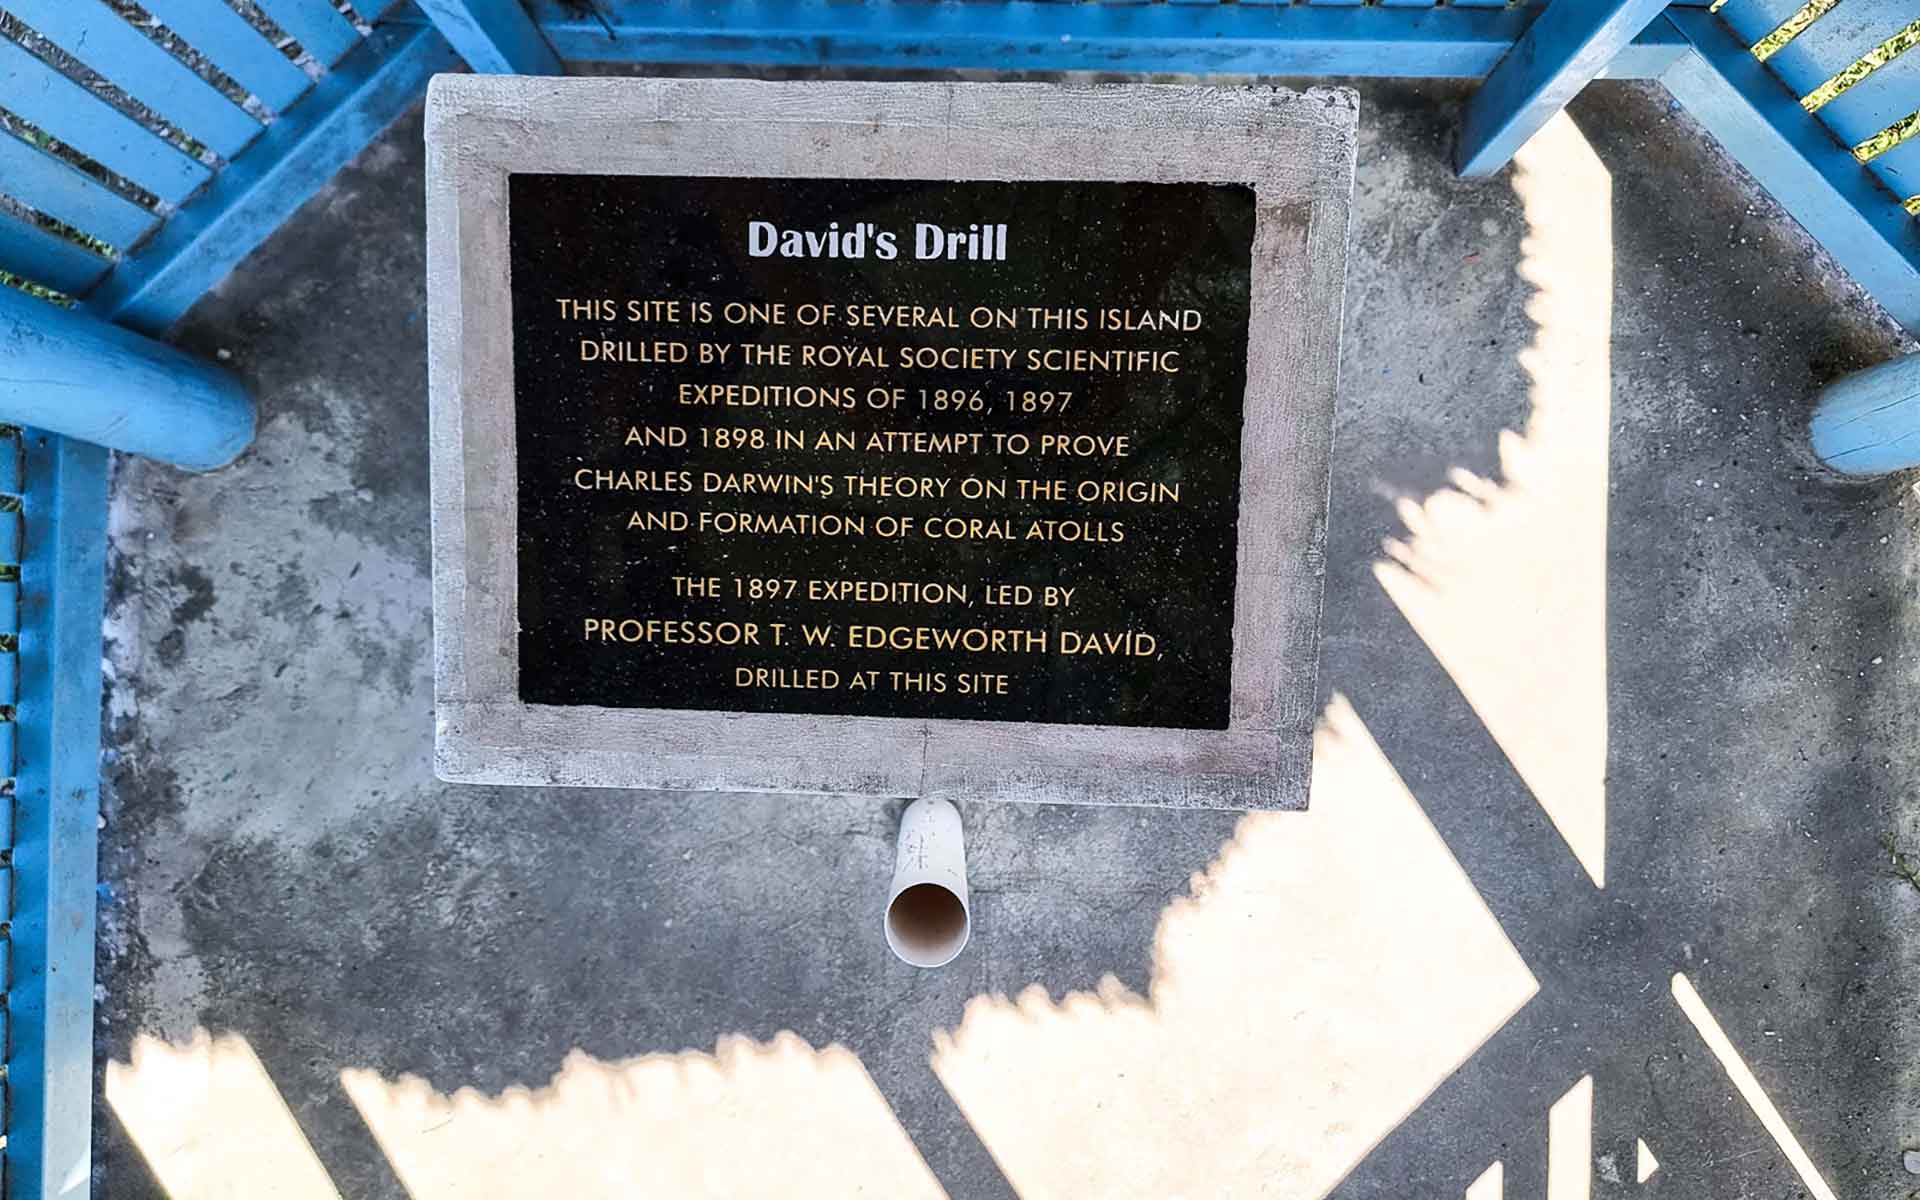 Commemorative plaque at the location of David's Drill